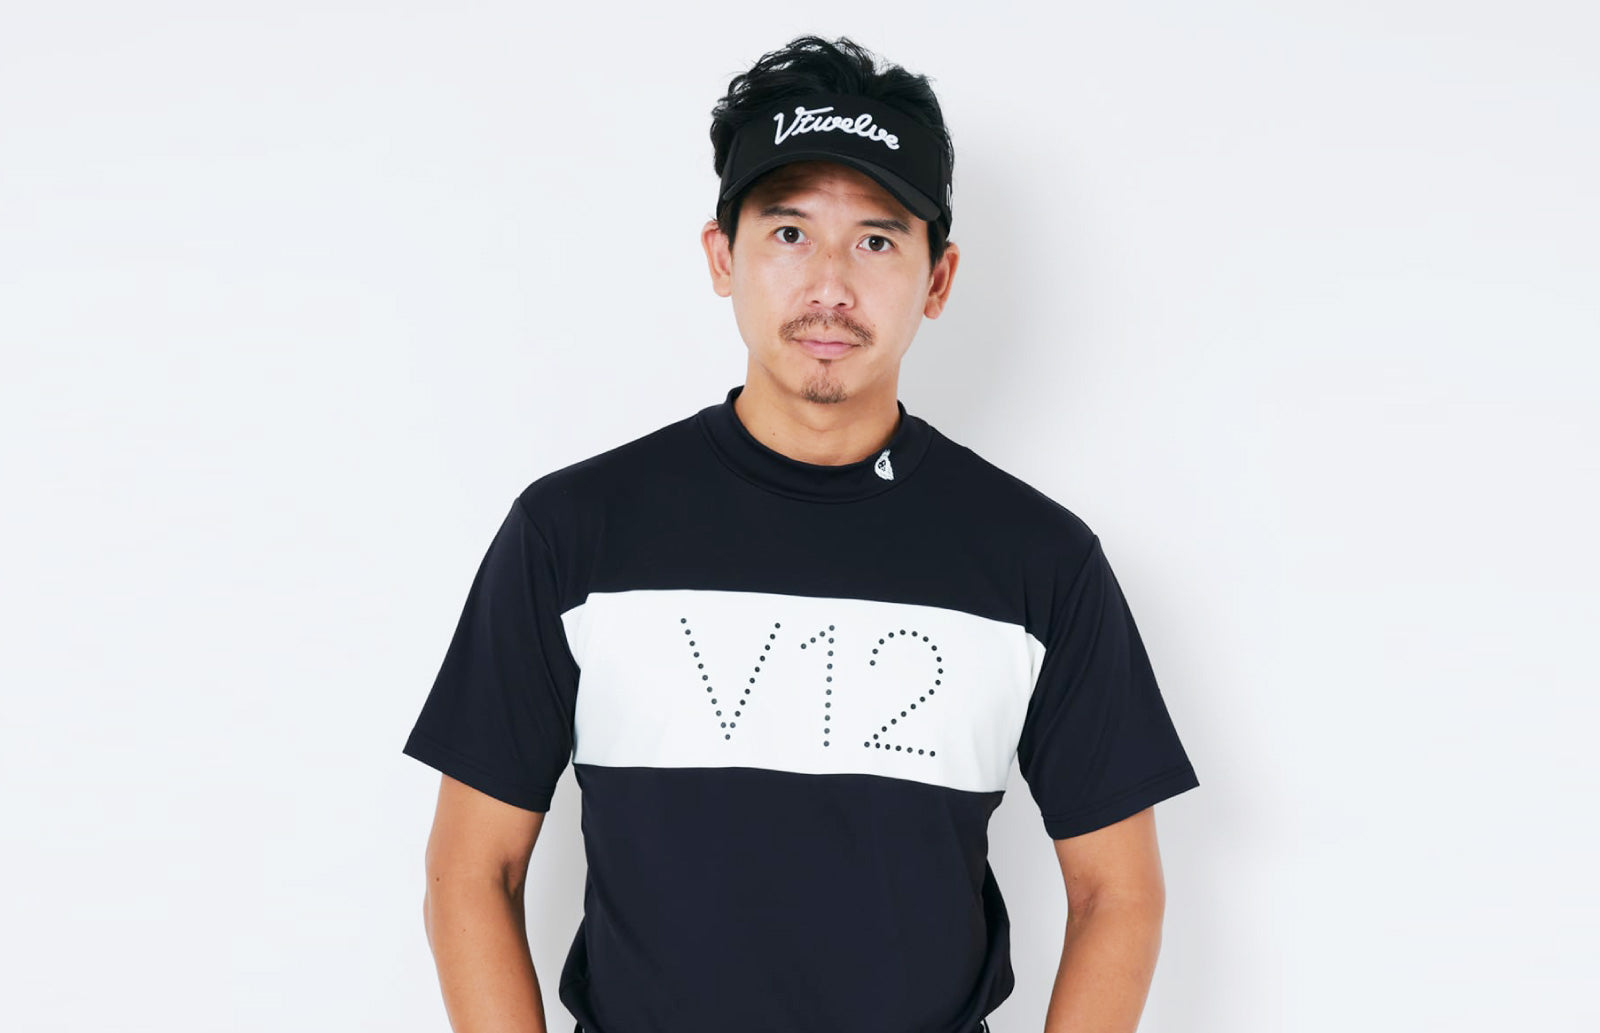 V12 オフィシャルサイト | ゴルフウェア & ゴルフバッグ